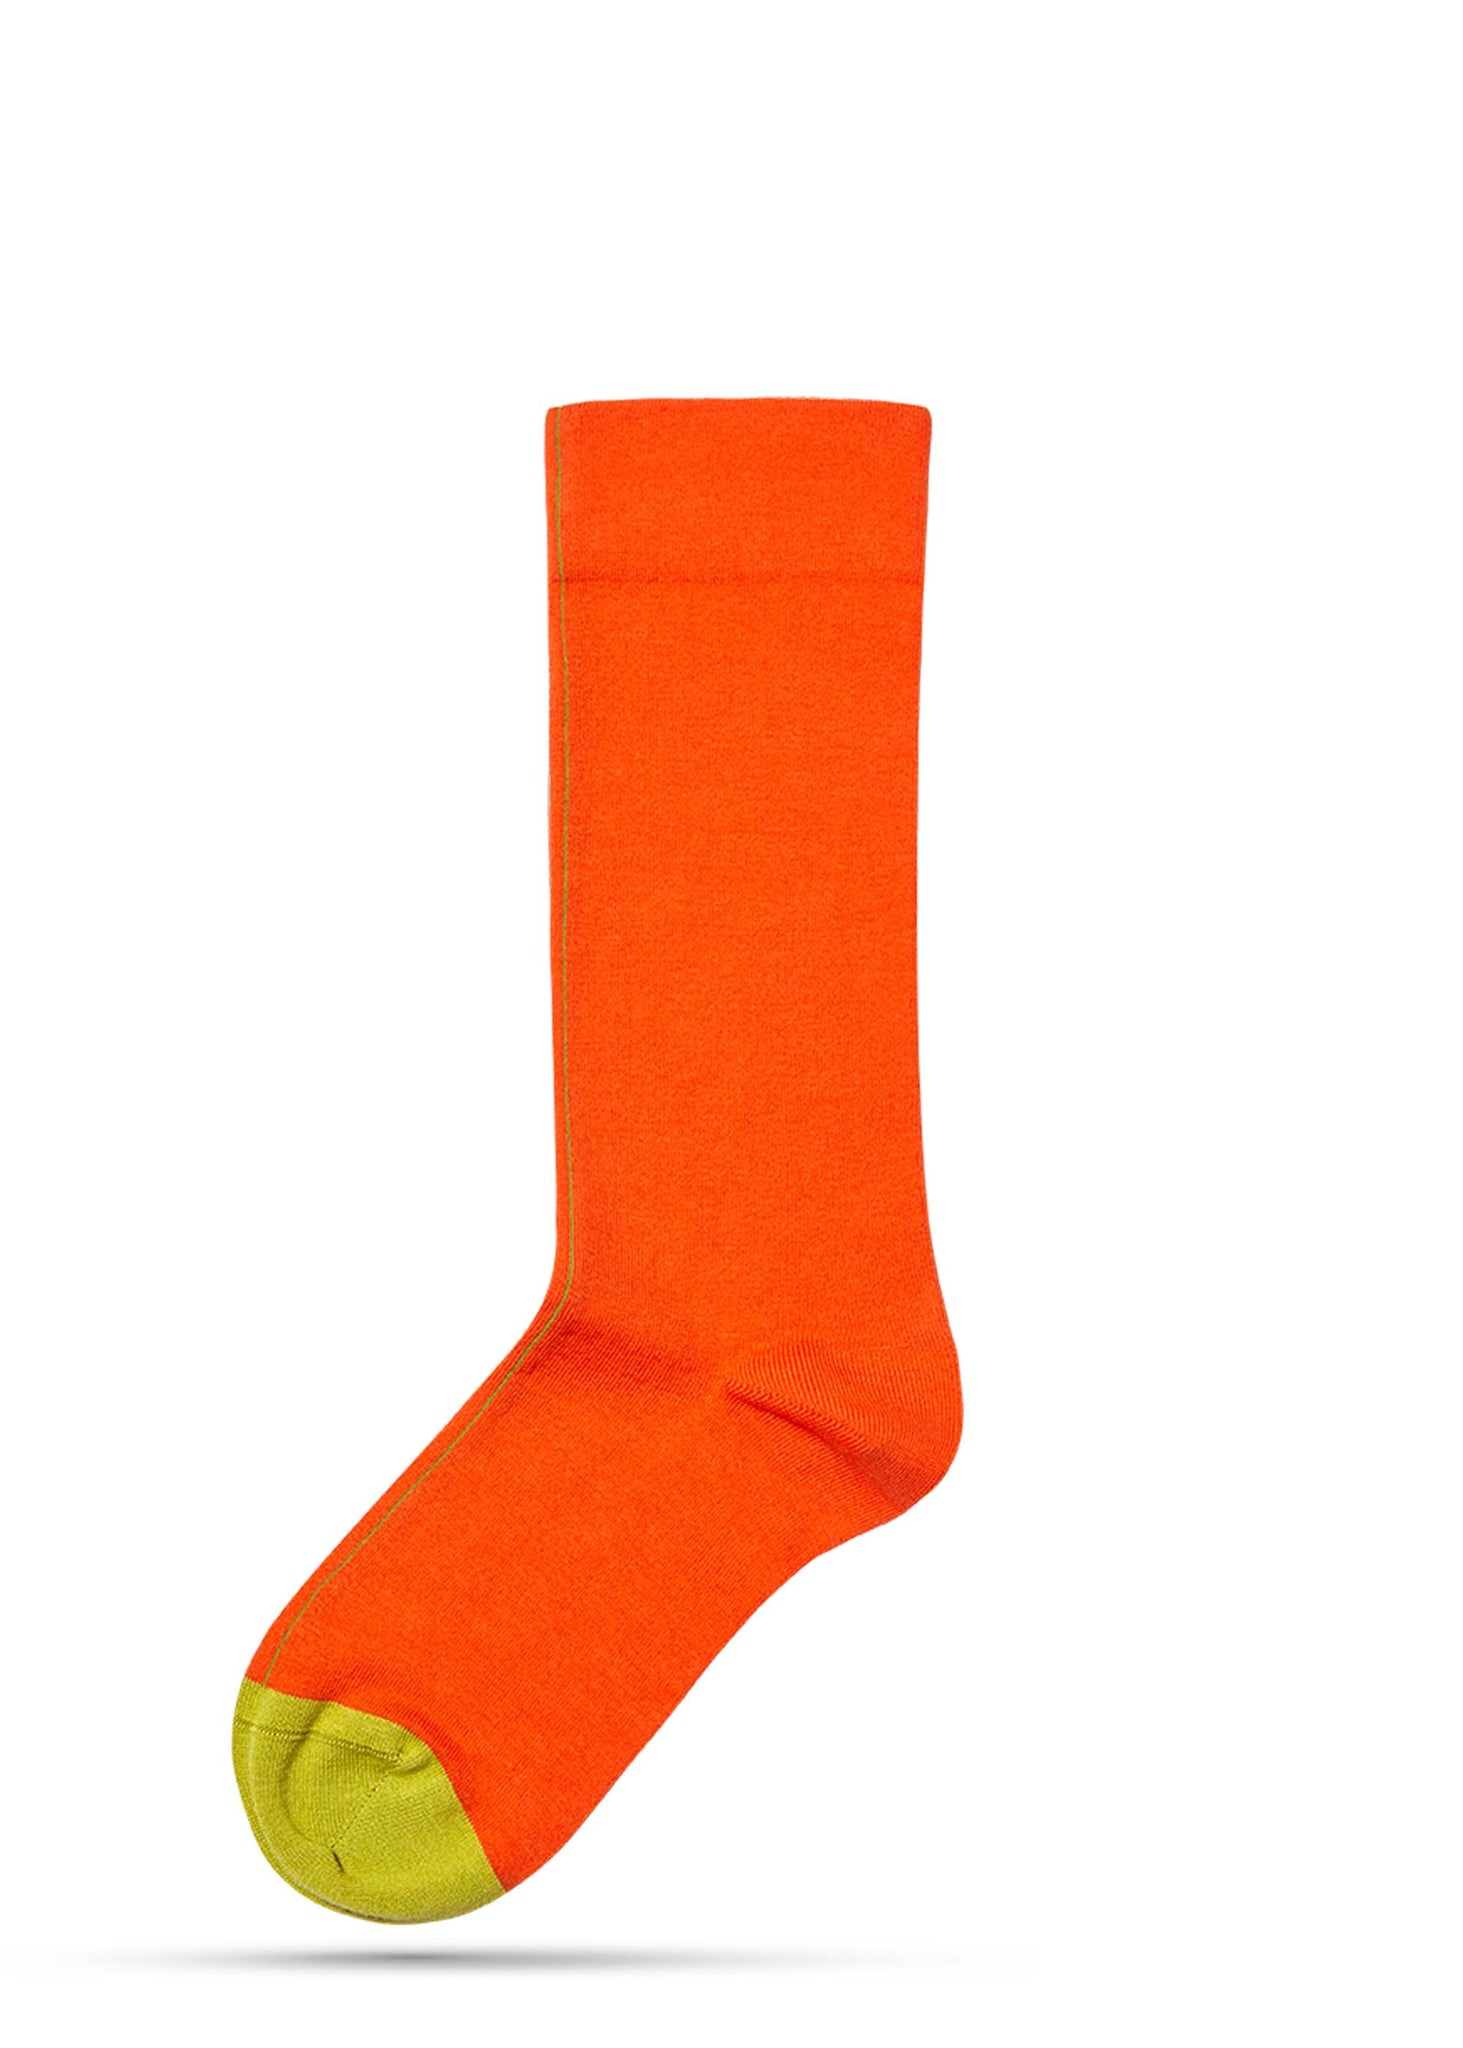 Tangerine Mid-Calf Socks - 157Moments